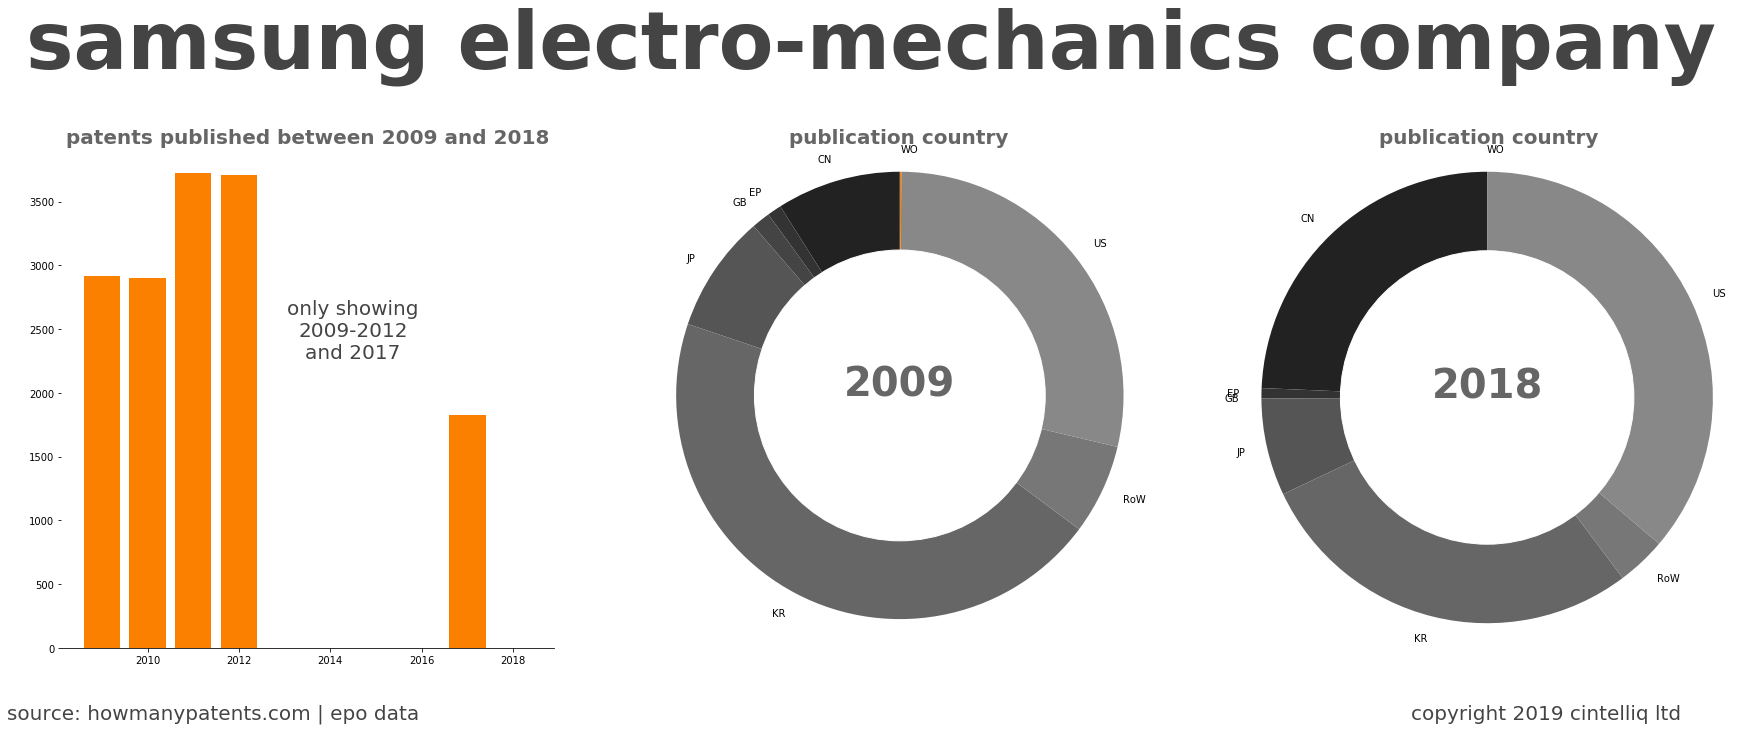 summary of patents for Samsung Electro-Mechanics Company